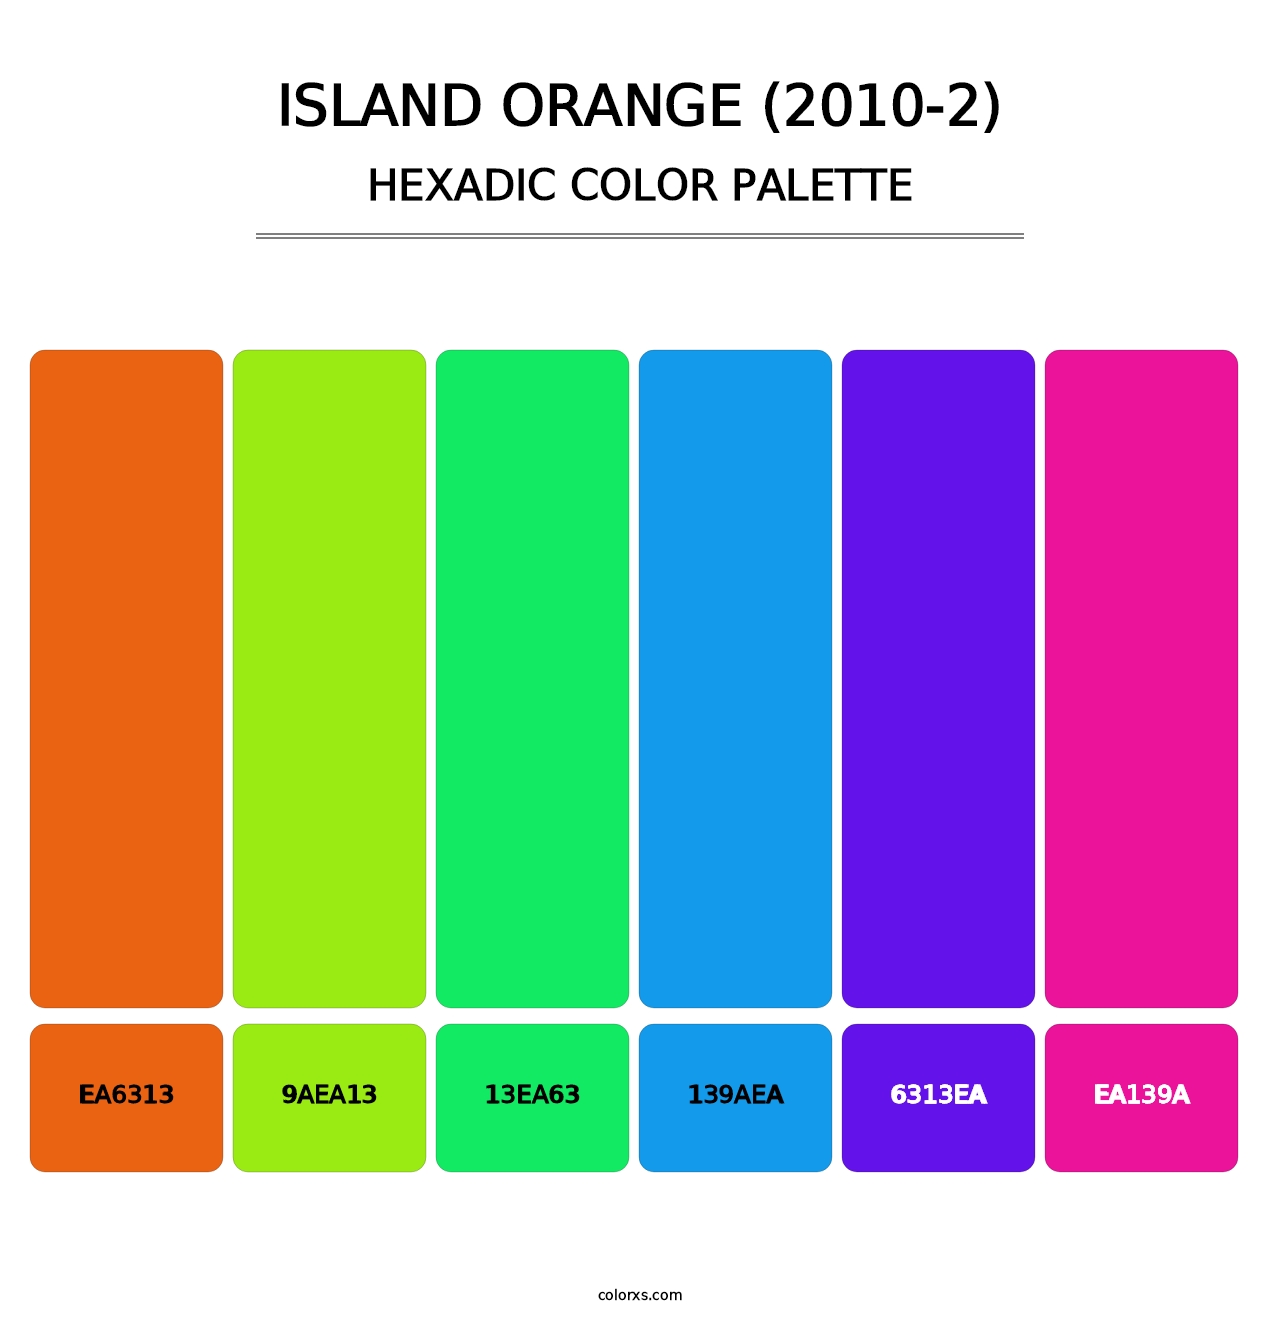 Island Orange (2010-2) - Hexadic Color Palette